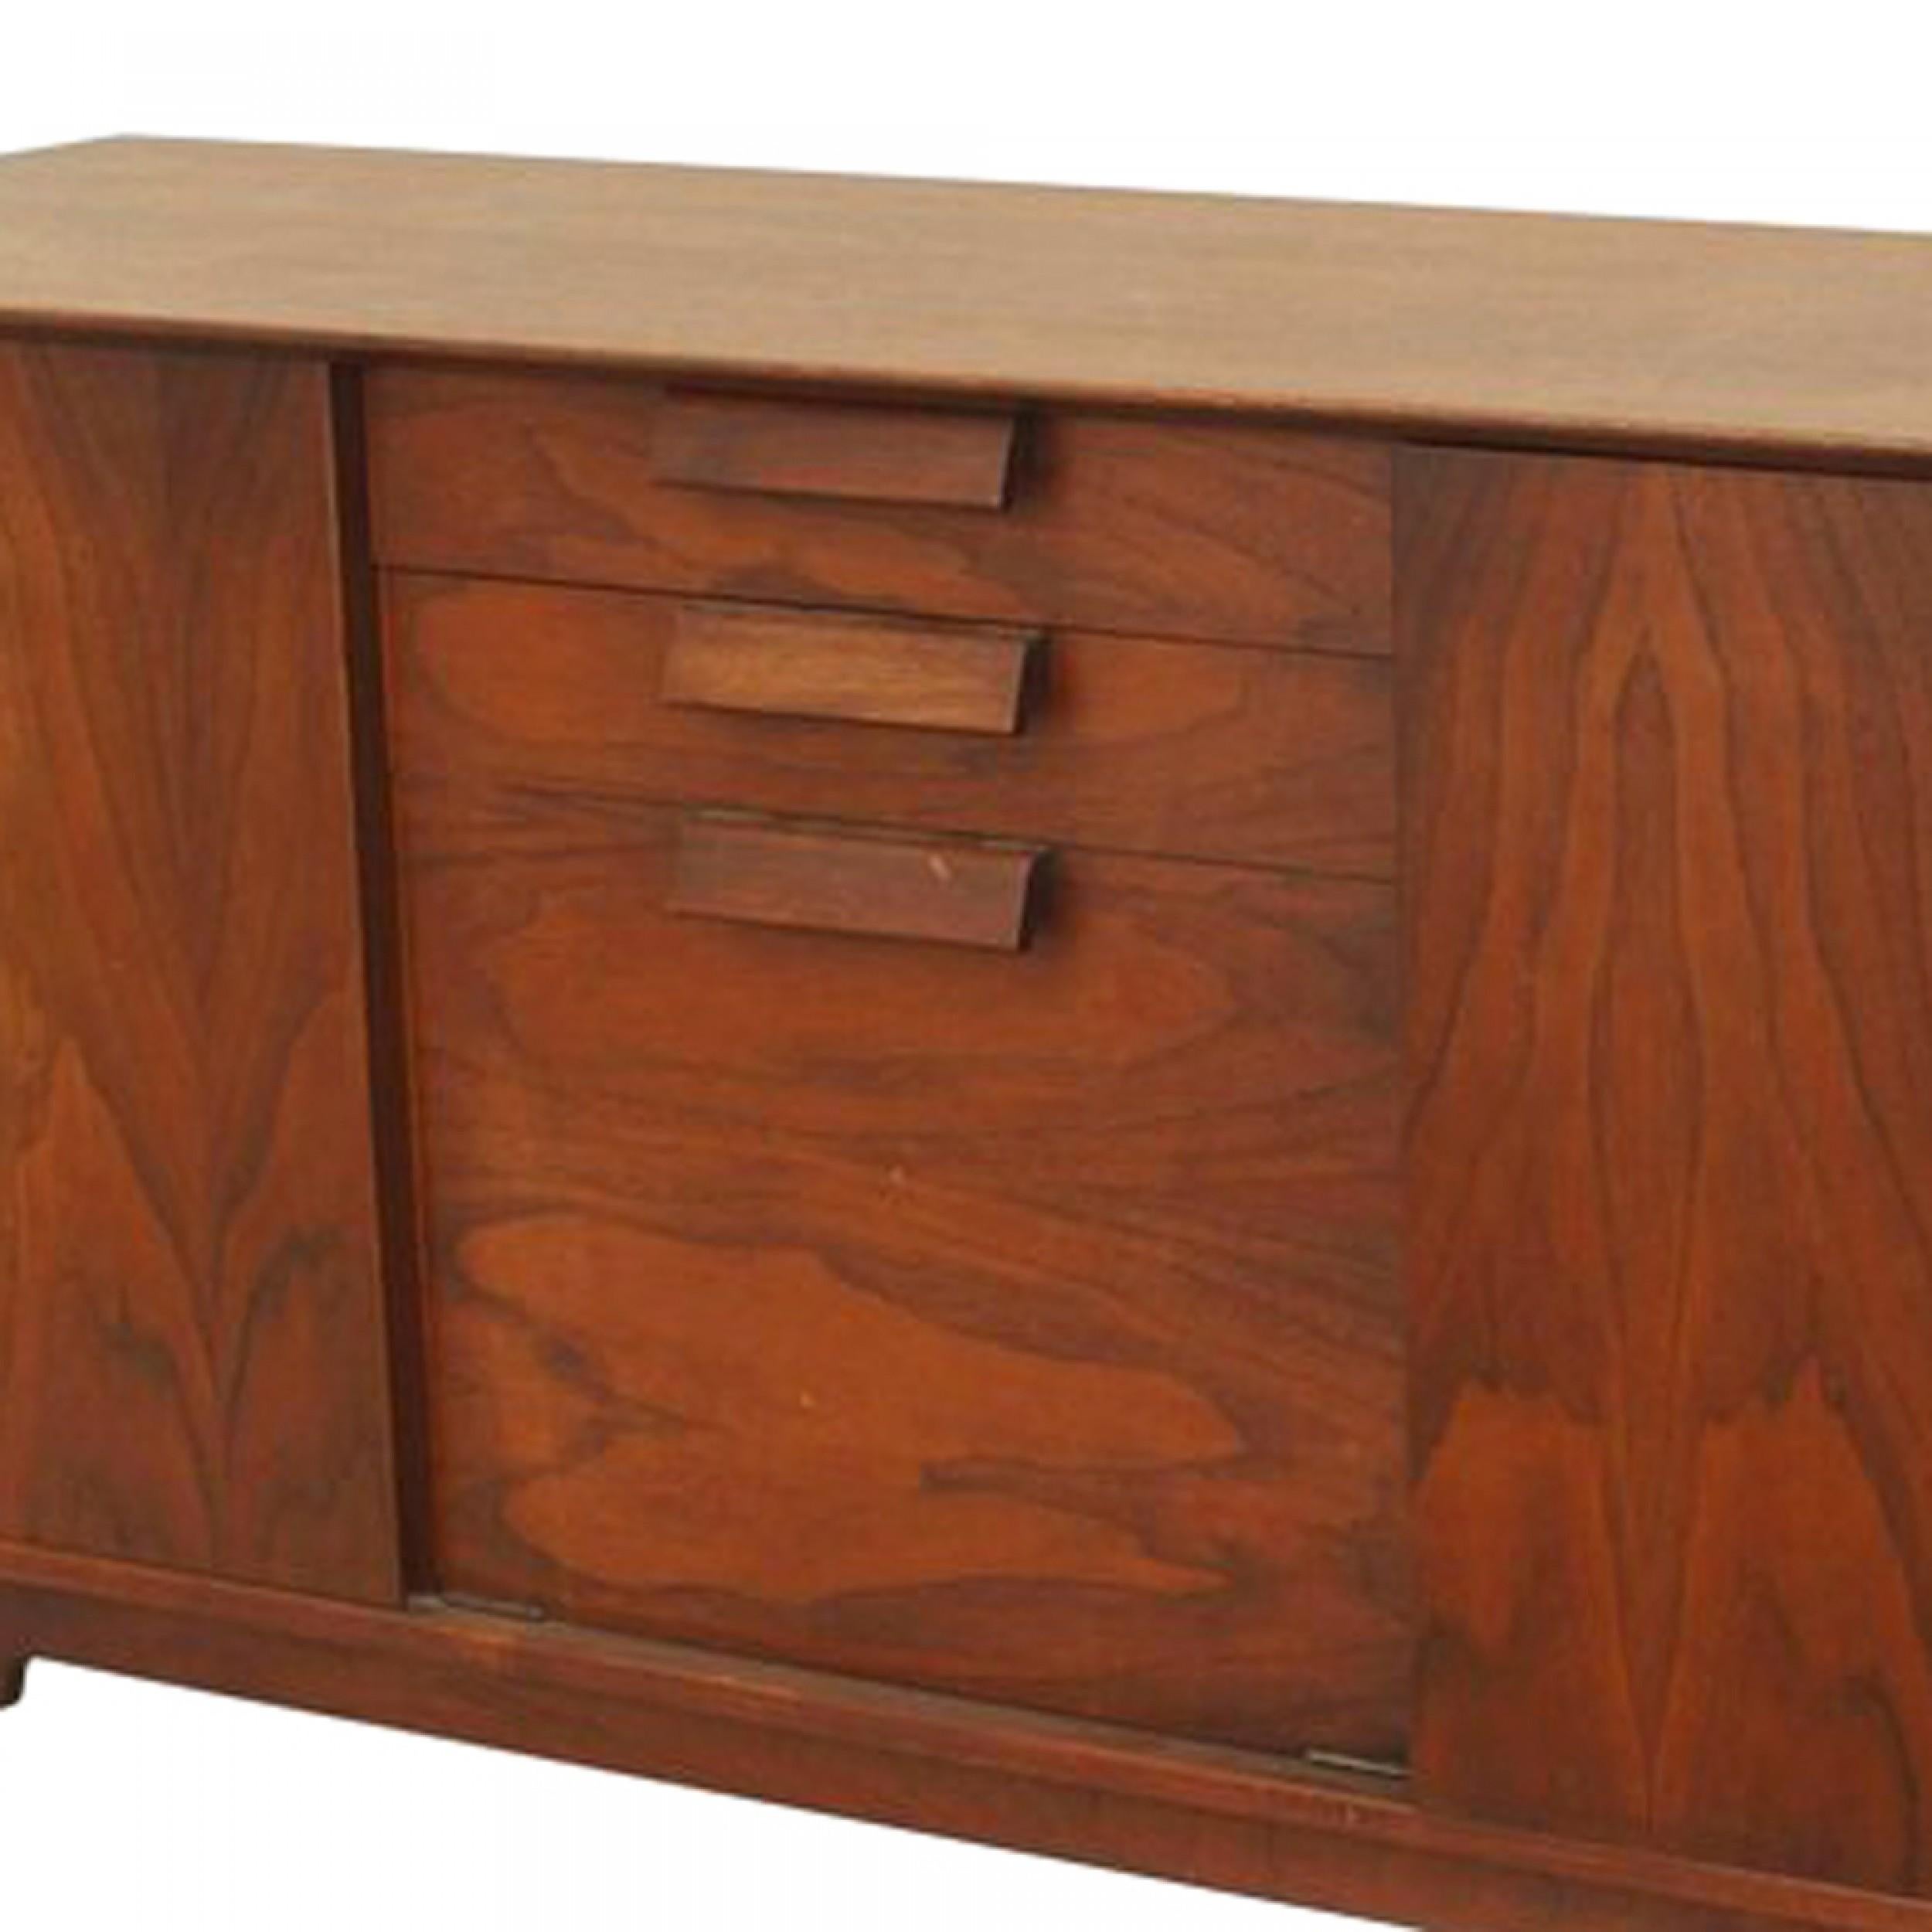 Danish Post-War Design teak credenza form sideboard with 2 door centering 3 drawers (label: JENS RISOM)
